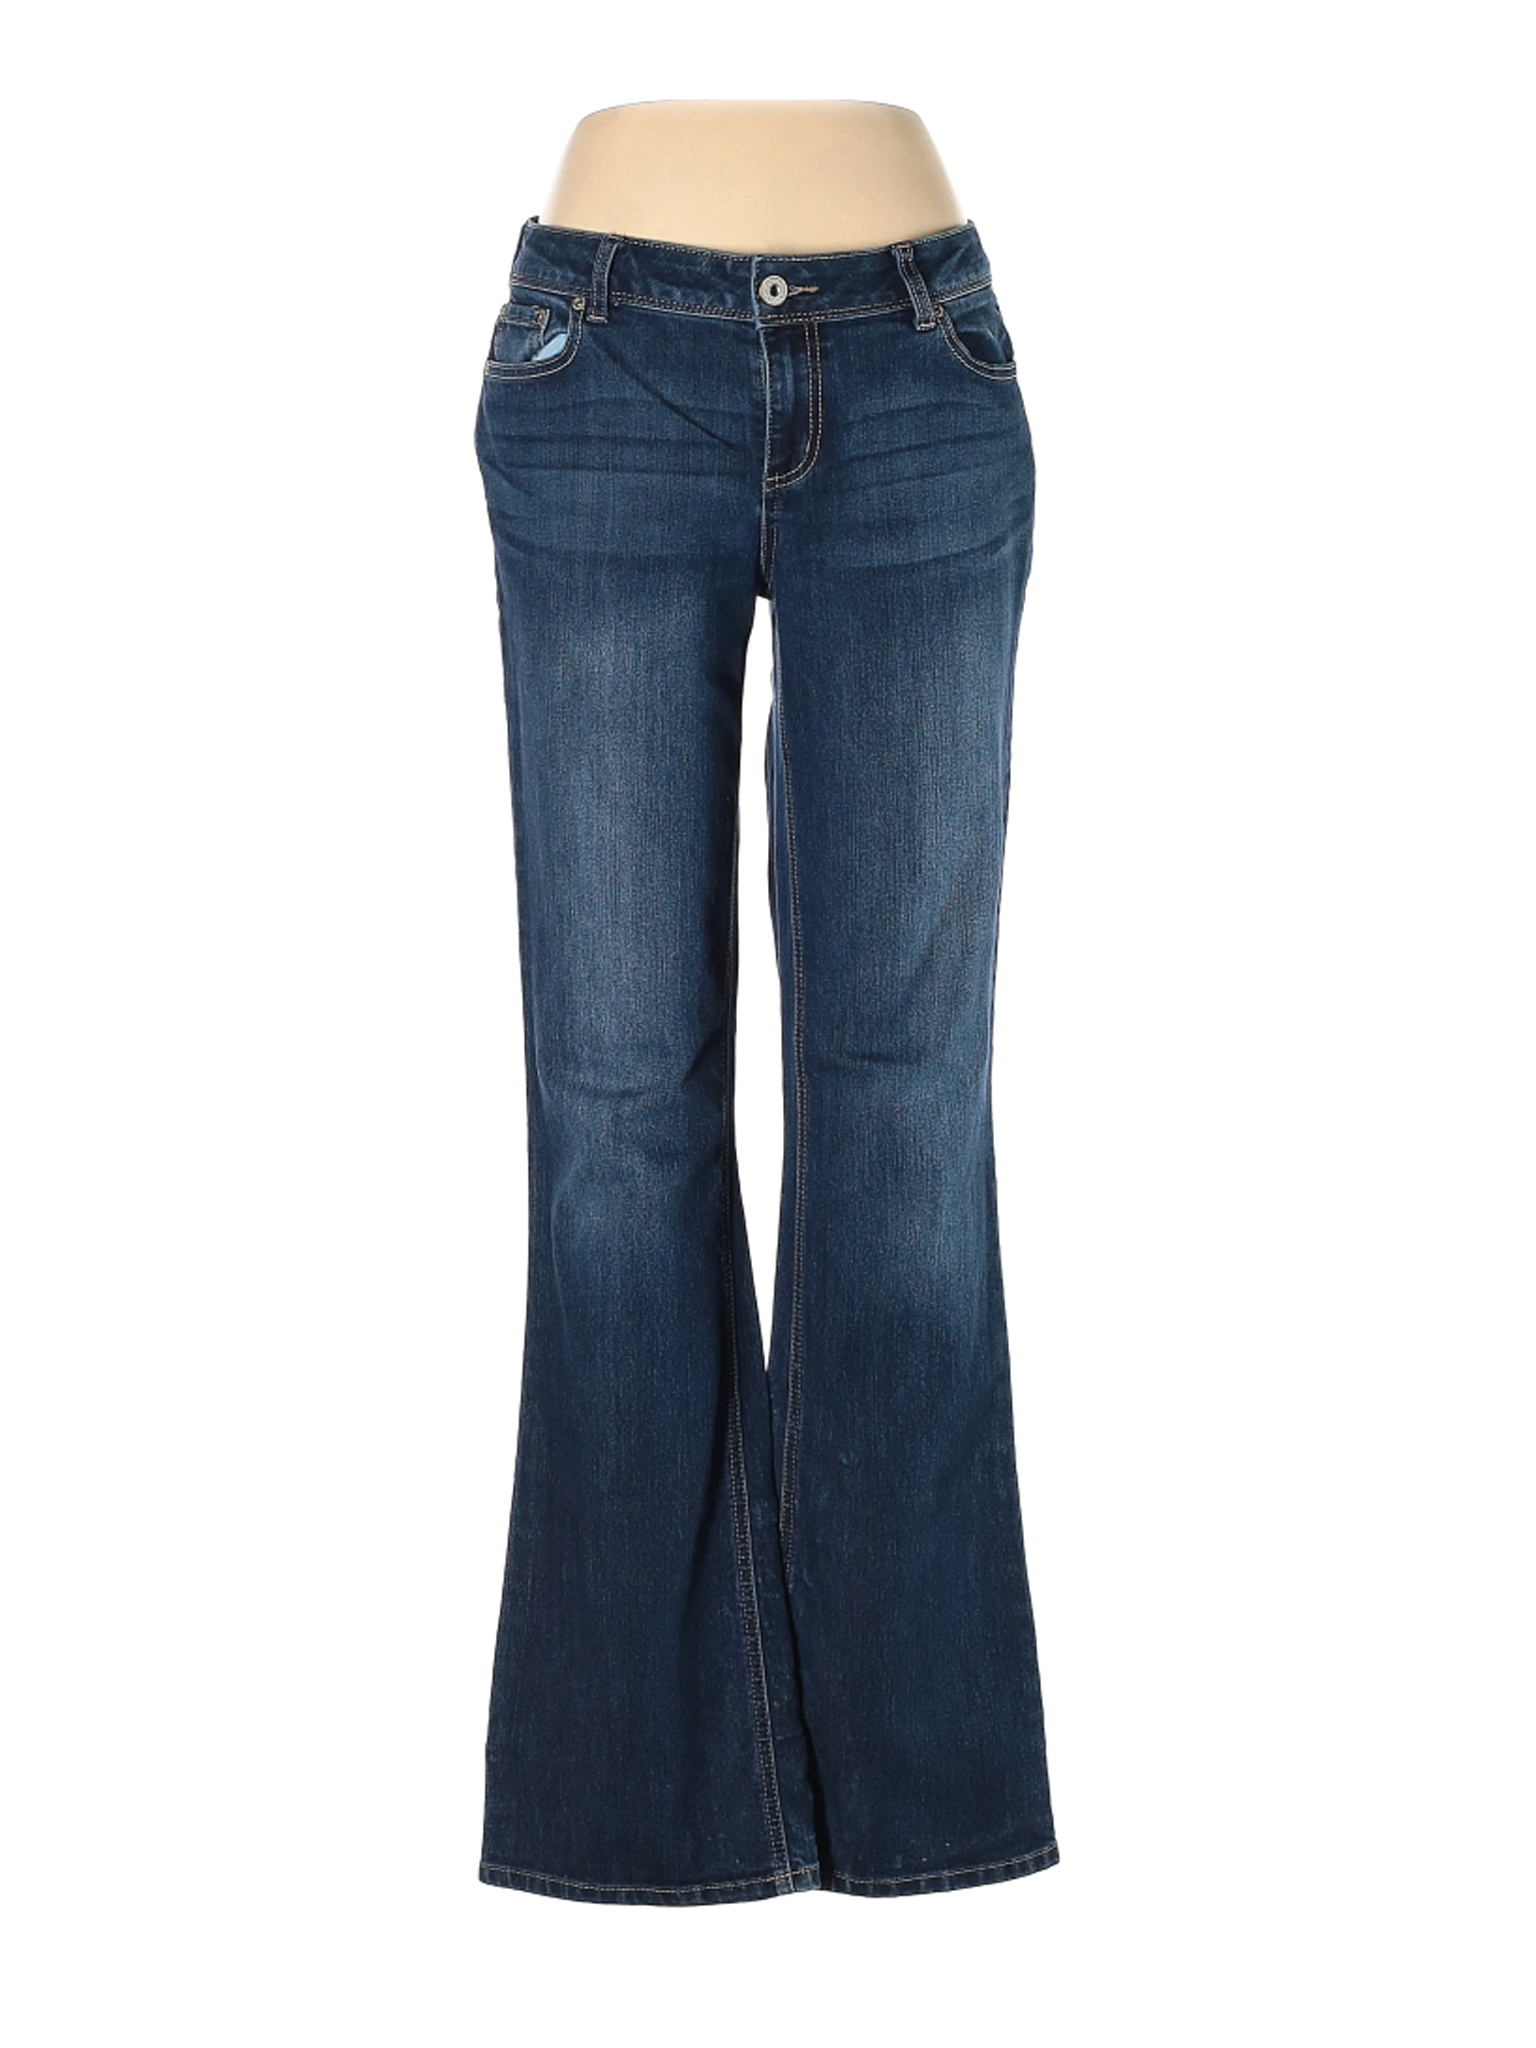 Maurices Women Blue Jeans 10 | eBay